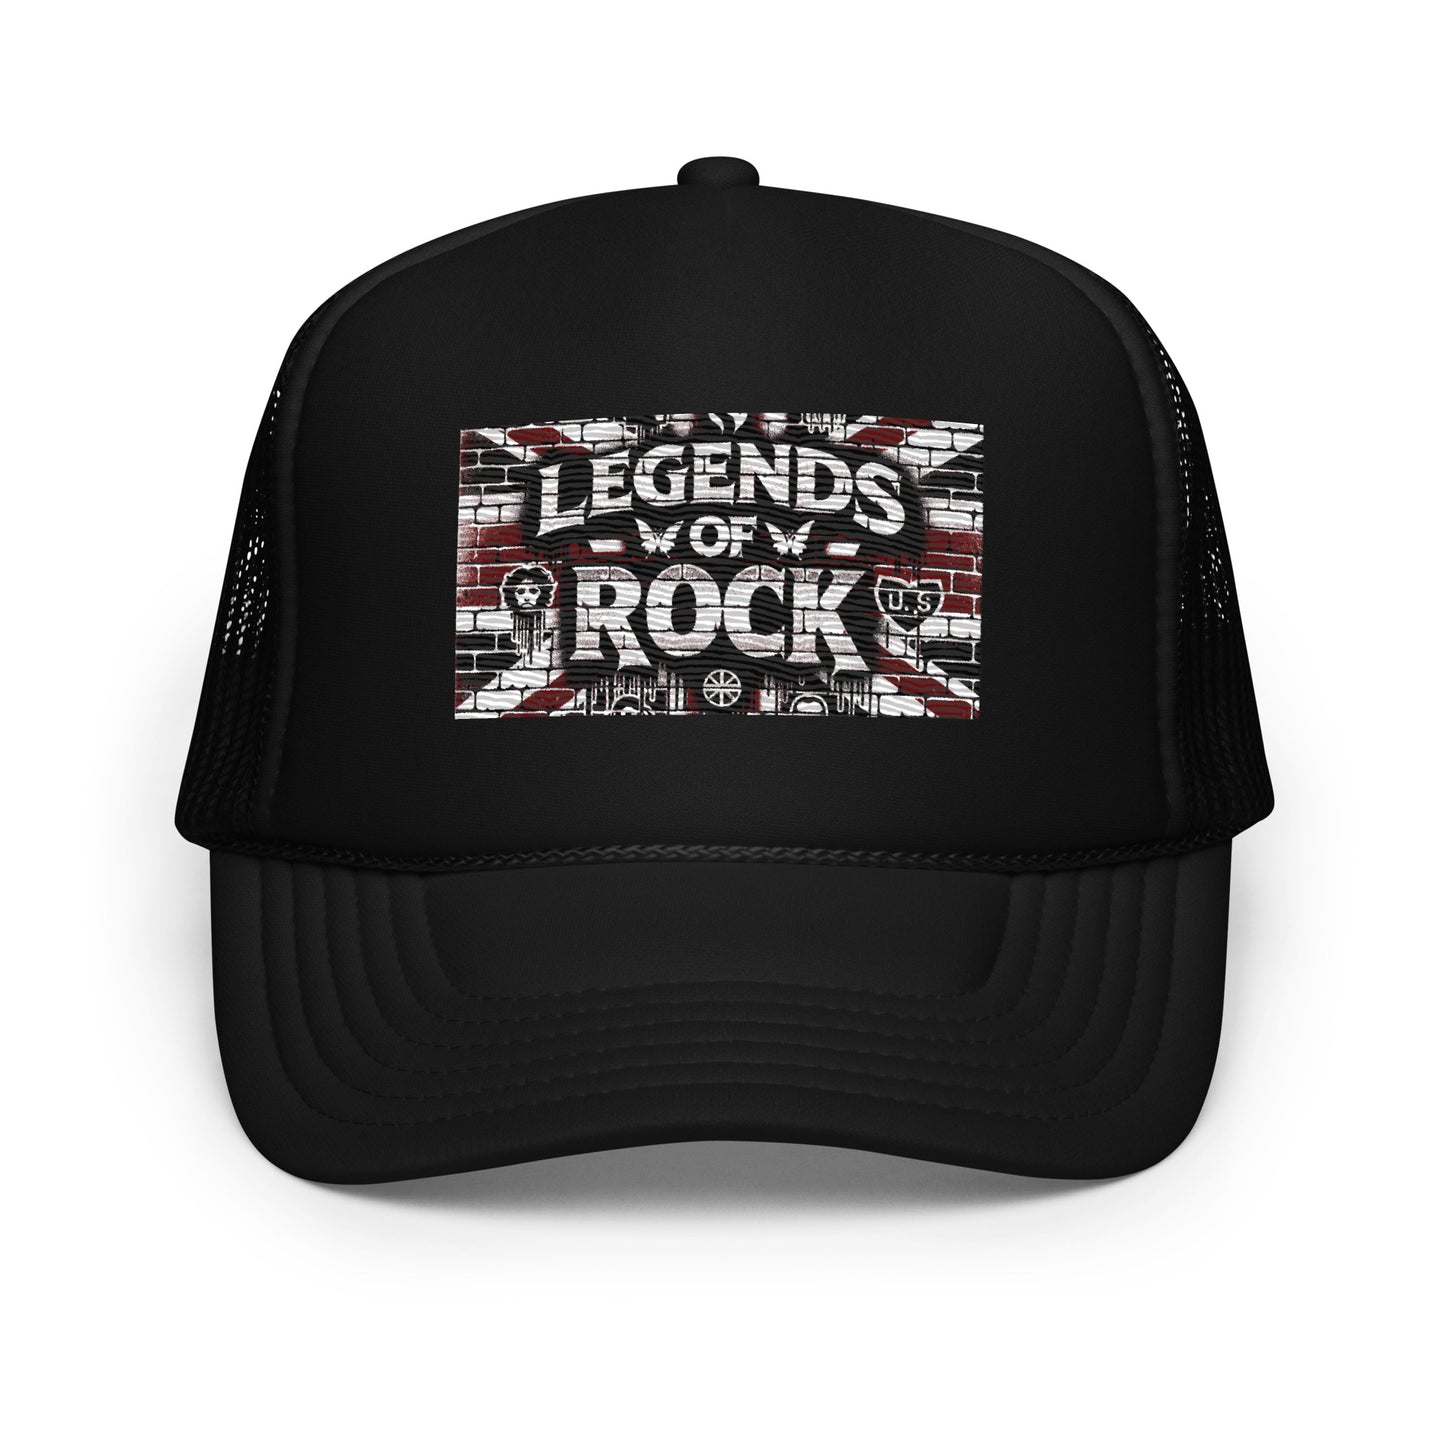 LEGENDS OF ROCK TRUCKER HAT